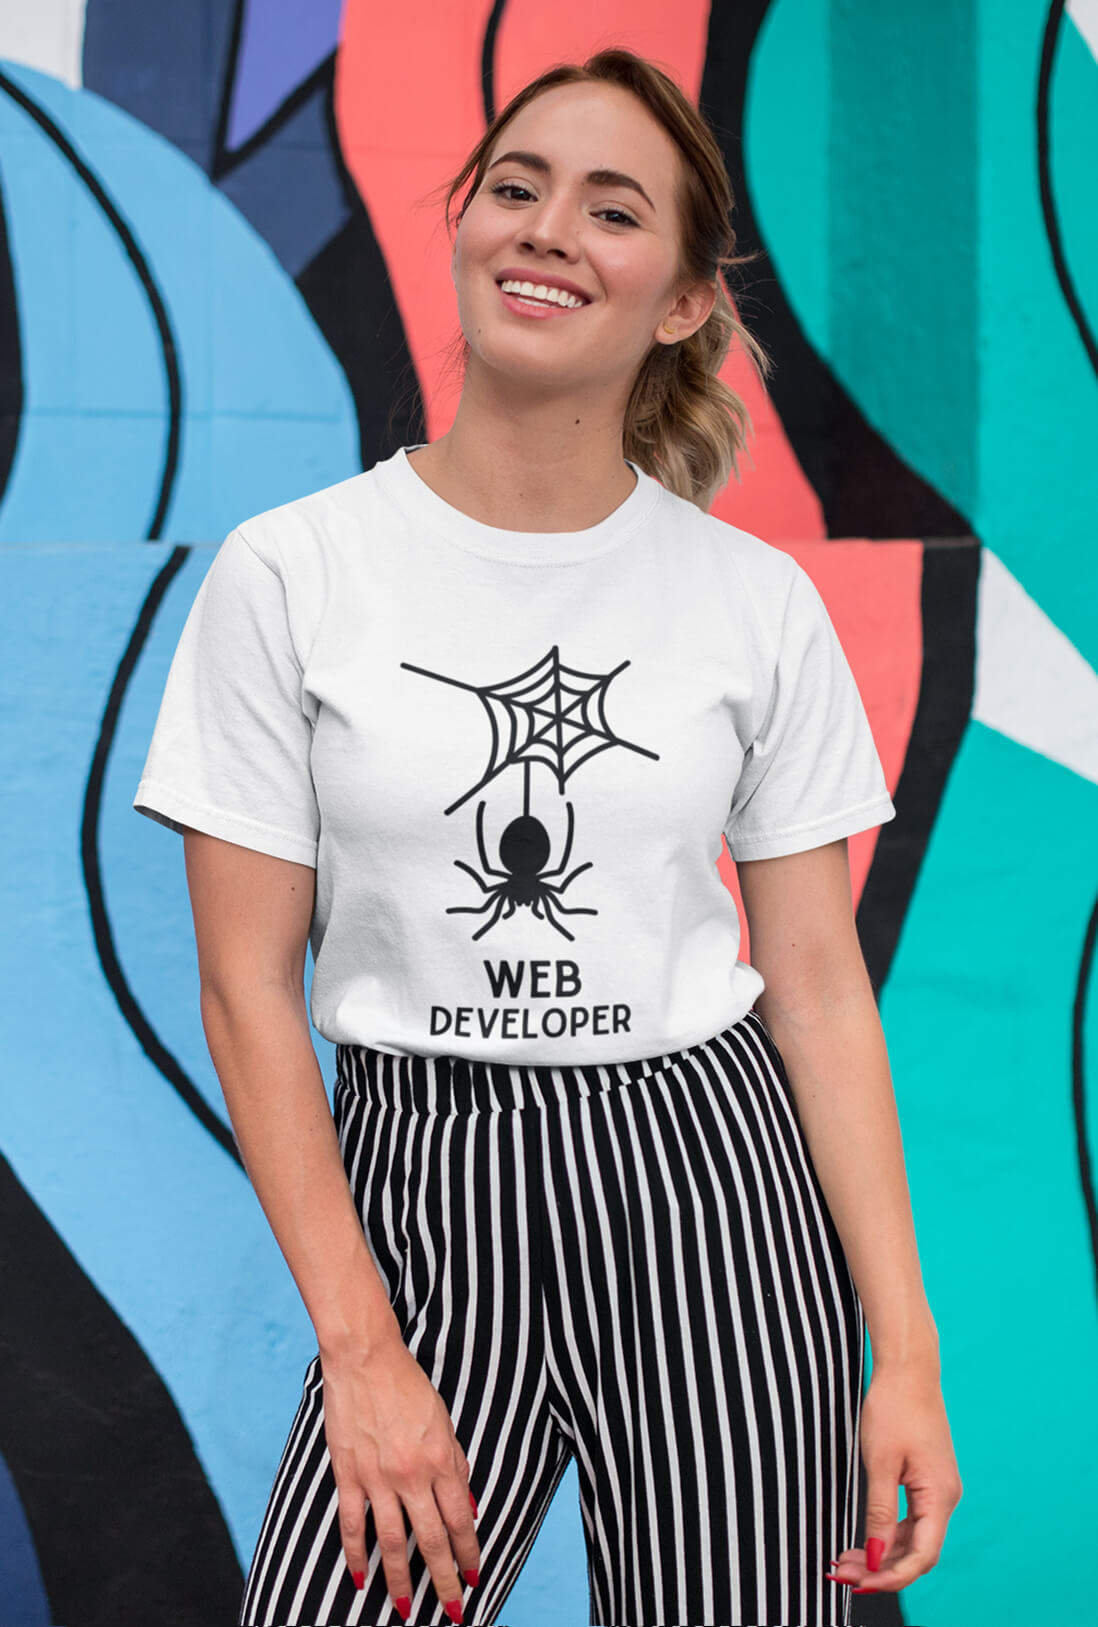 Web Developer Women's Cotton T-Shirt